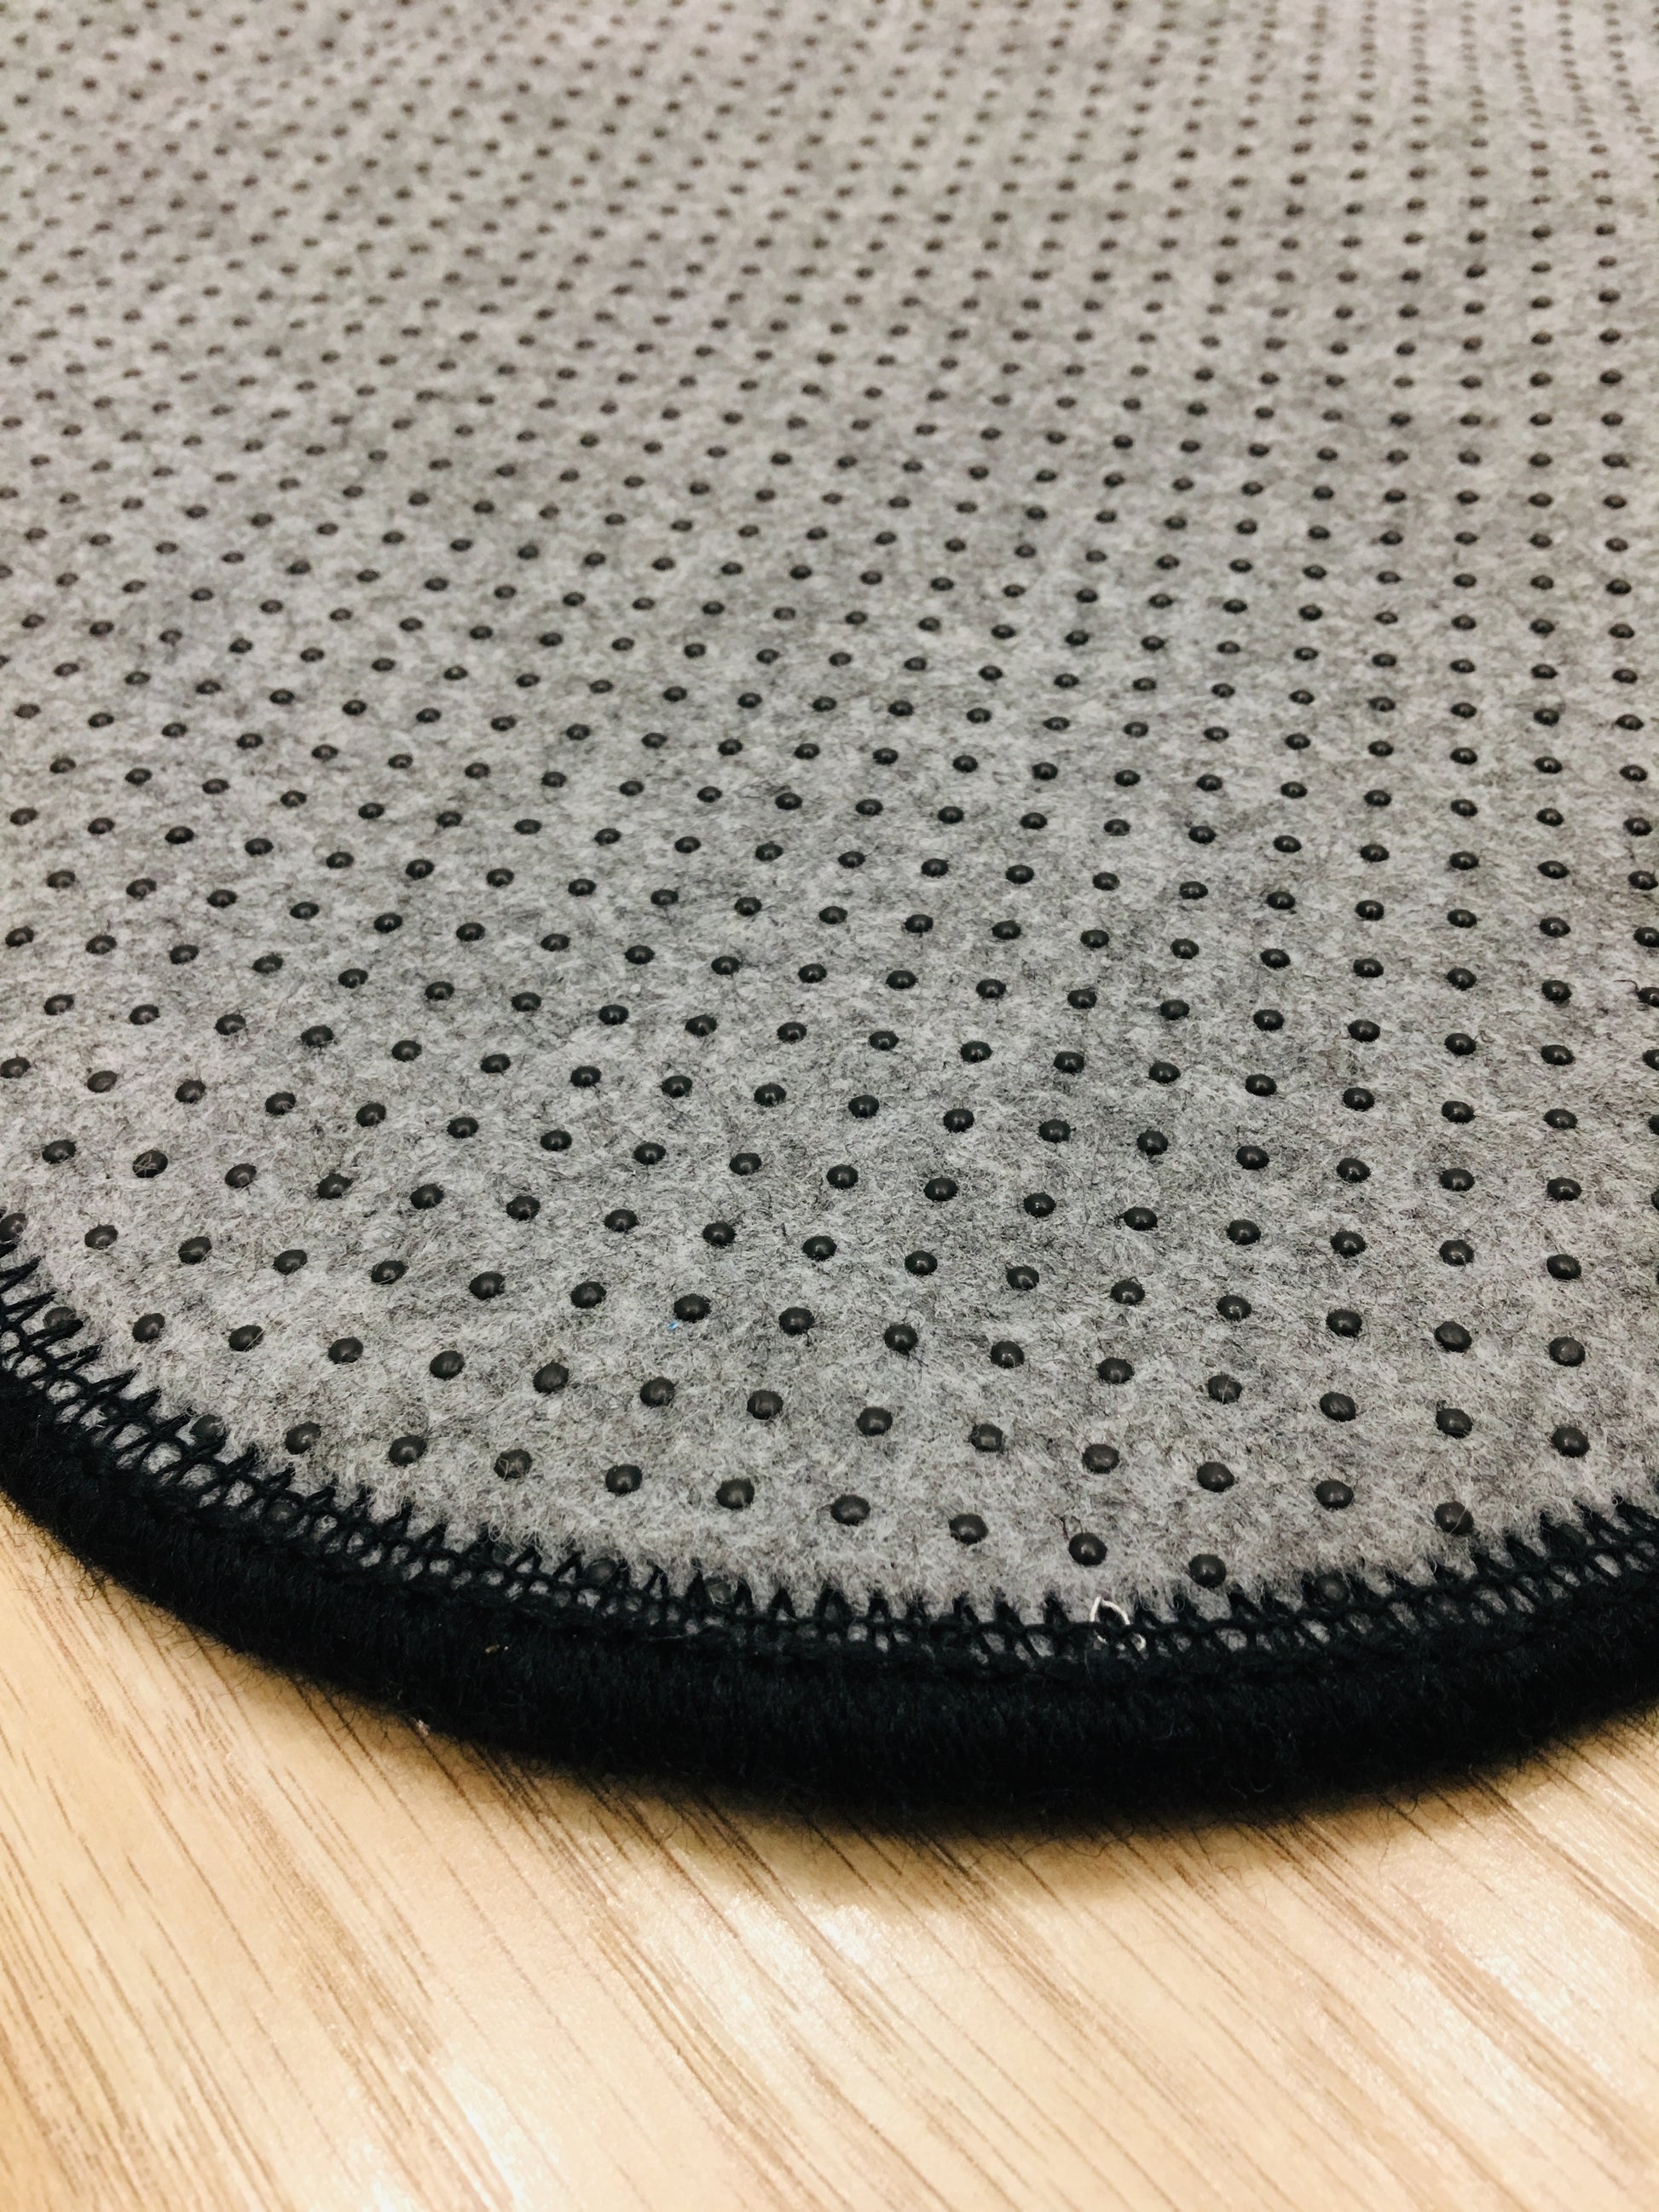 Baby Milo Heart Bape Wool Thread Modern Accent Rug Premium Area Living Room Carpet